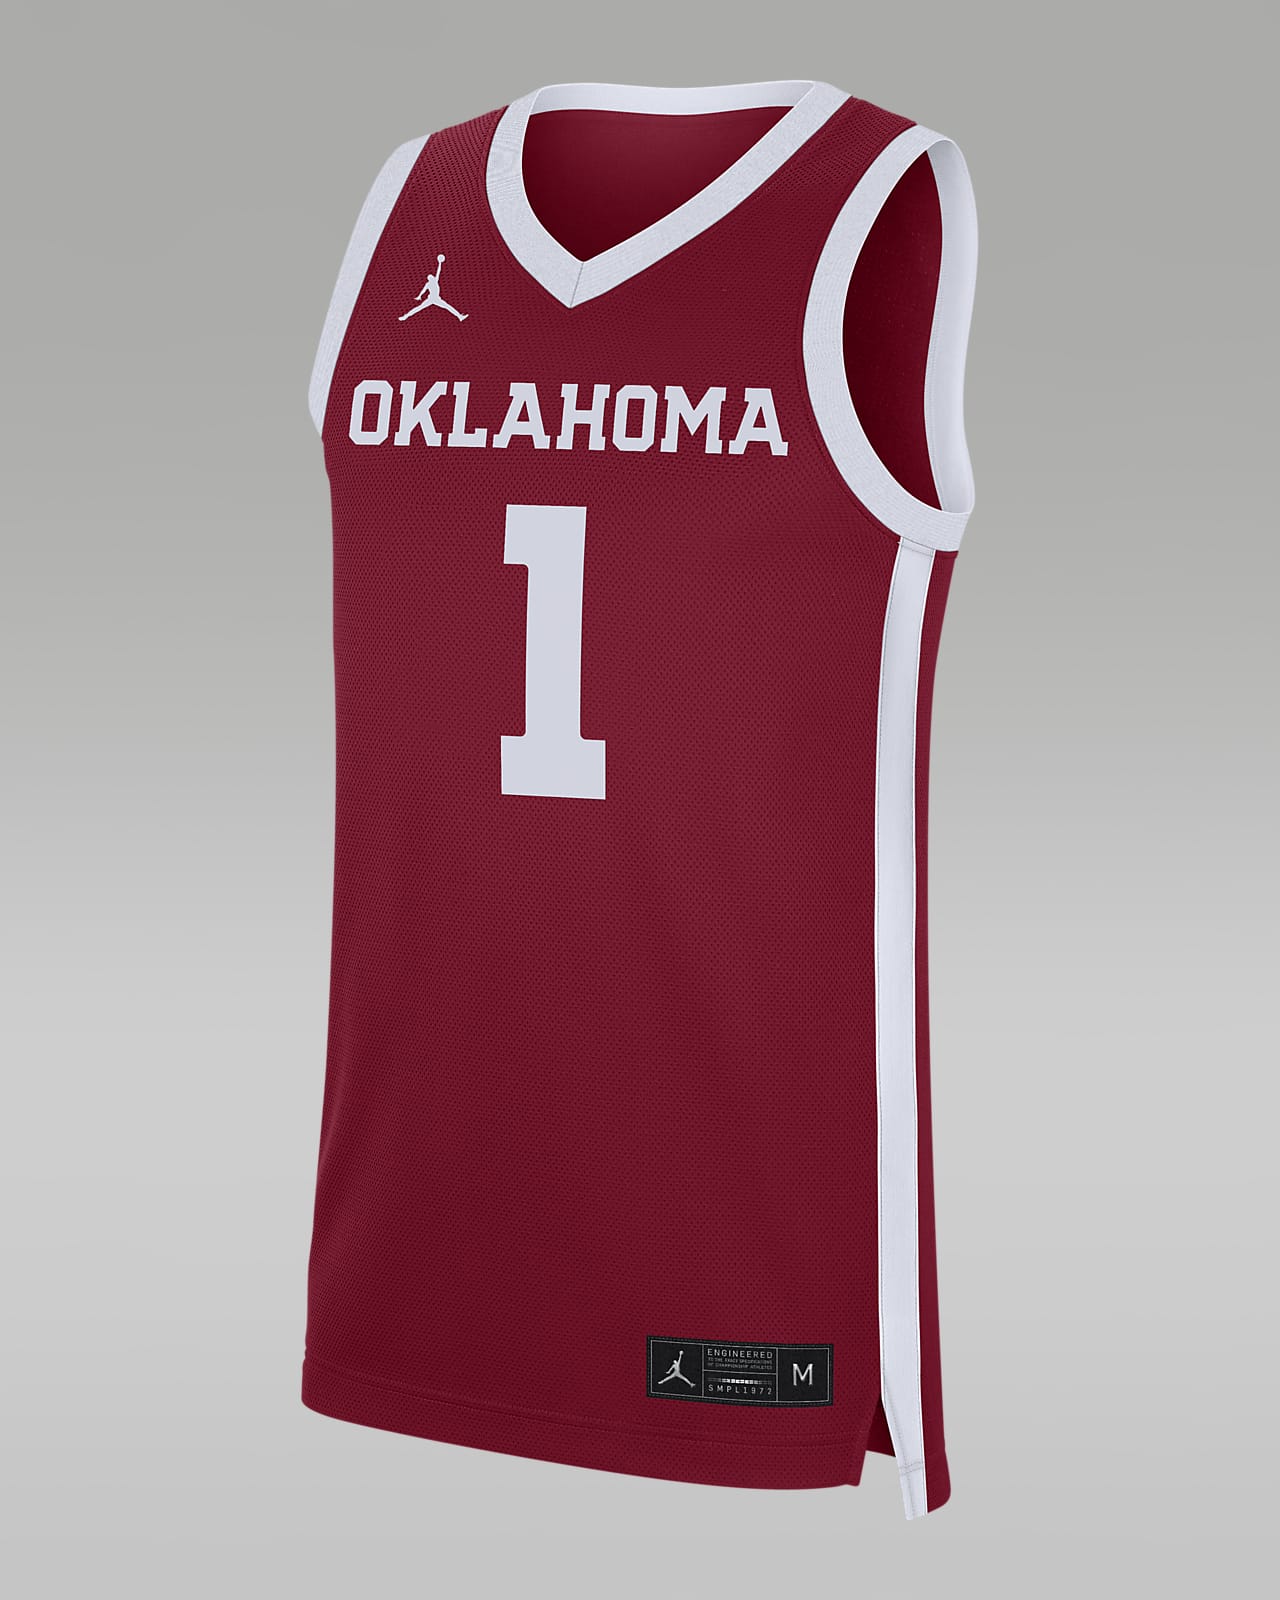 Nike College Replica (Oklahoma) Men's Basketball Jersey